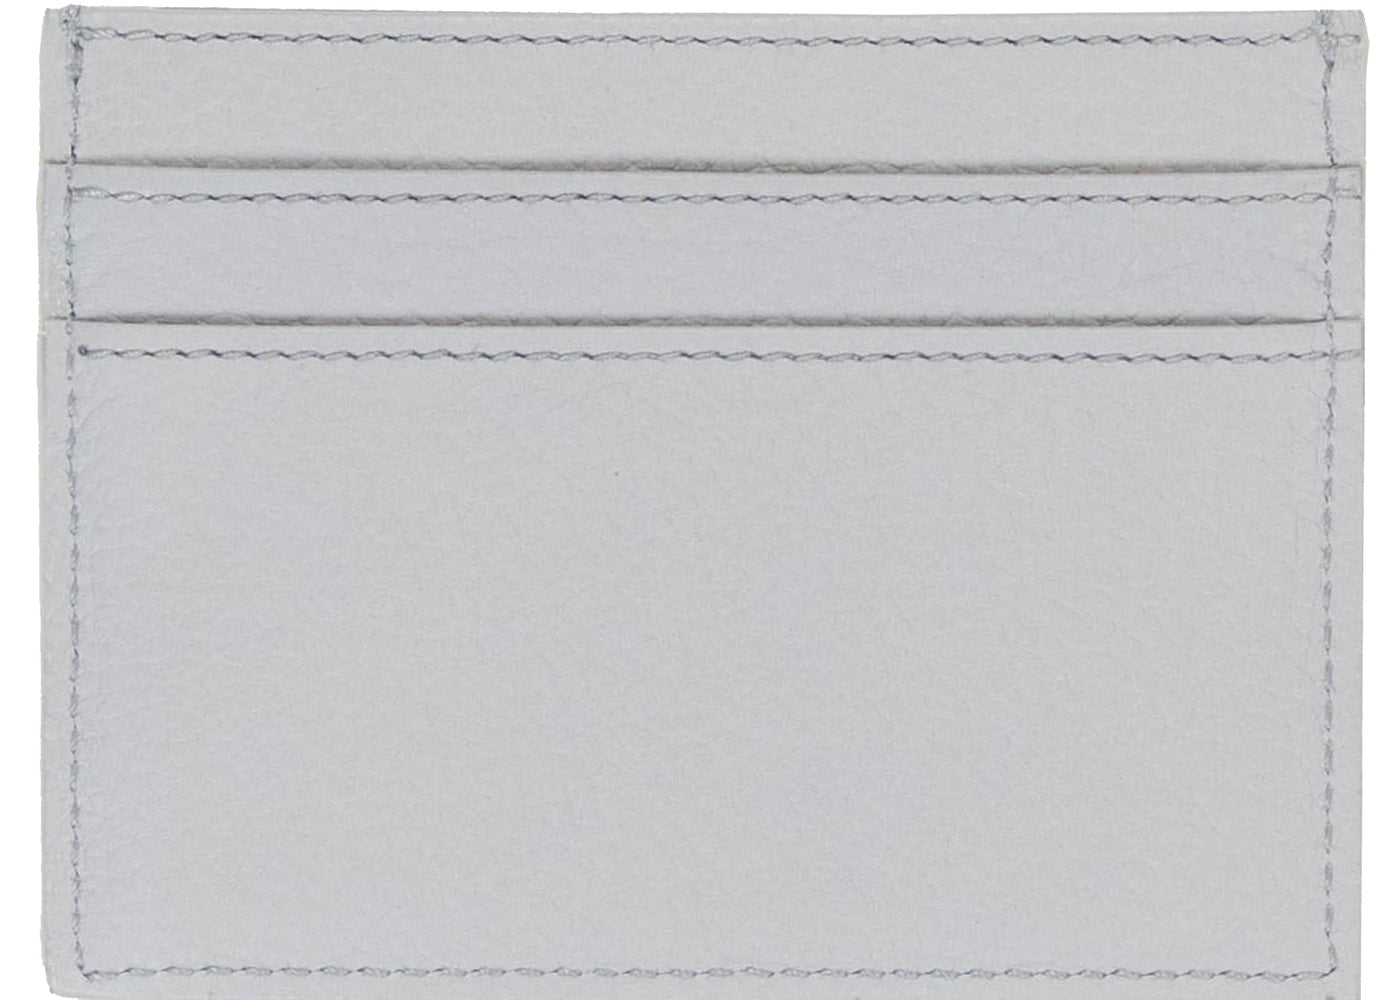 Dior x Jordan Wings Card Holder (4 Card Slot) Navy